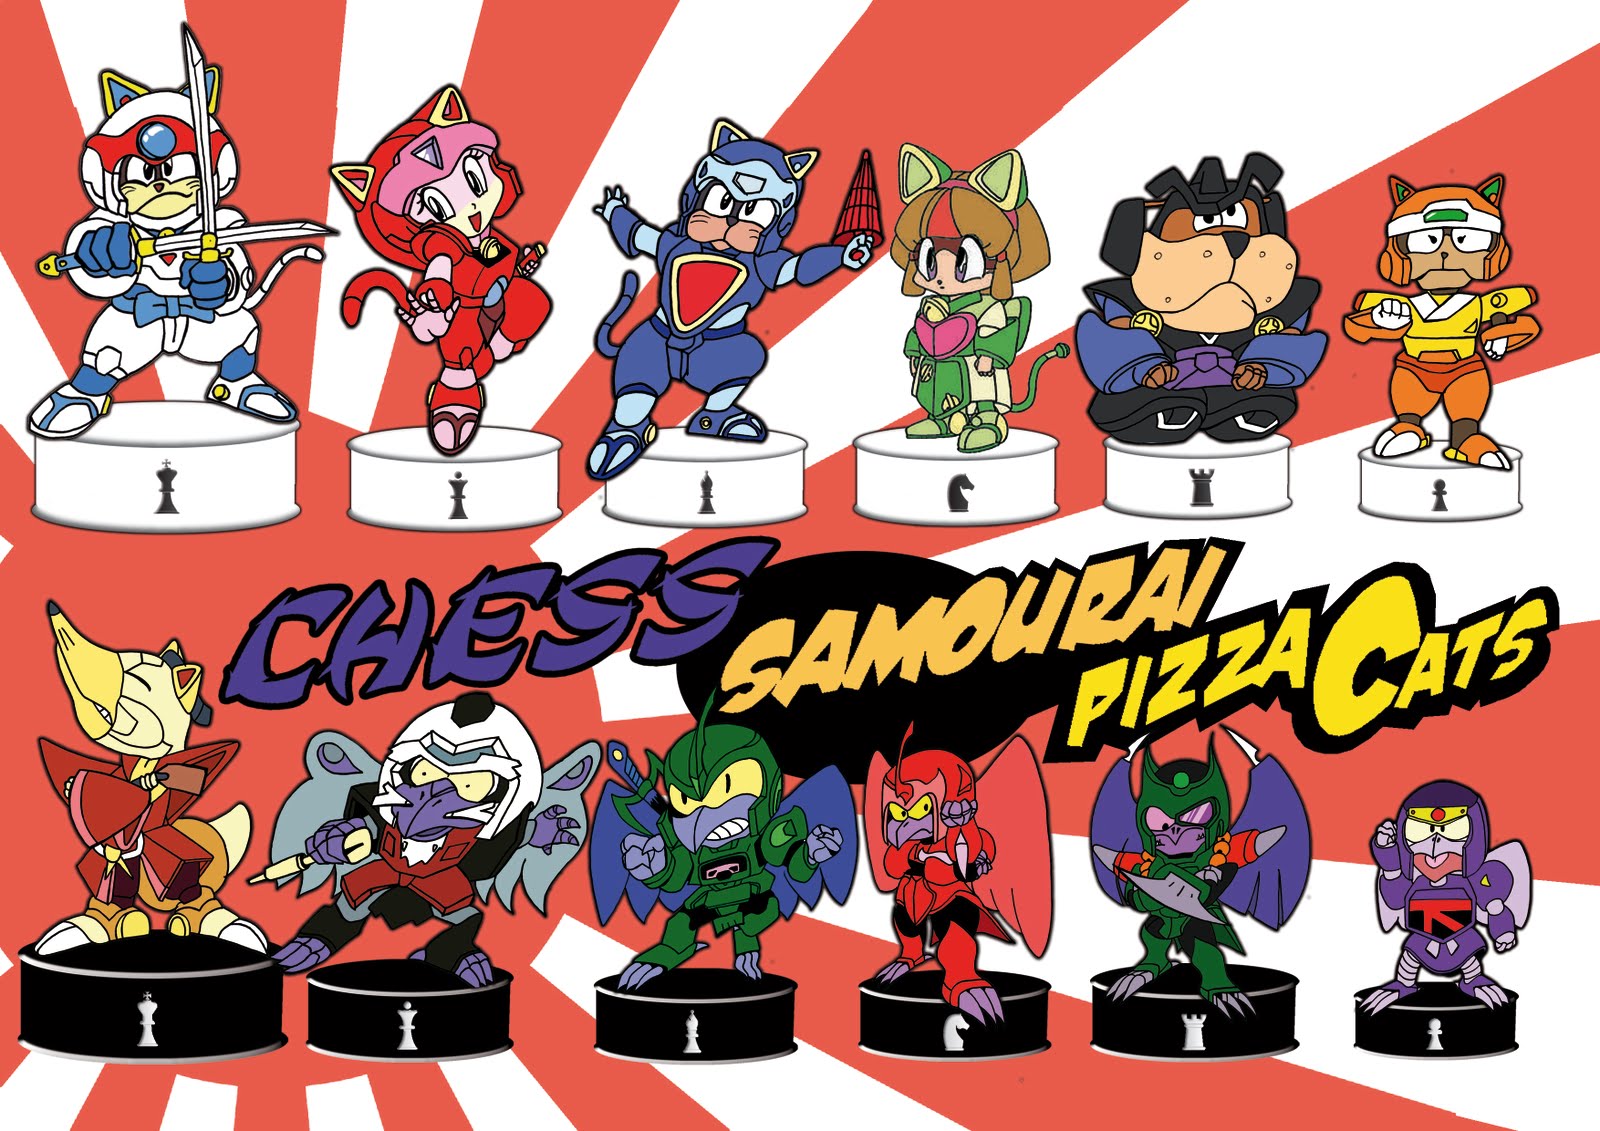 Samurai, Pizza and Cats on Pinterest